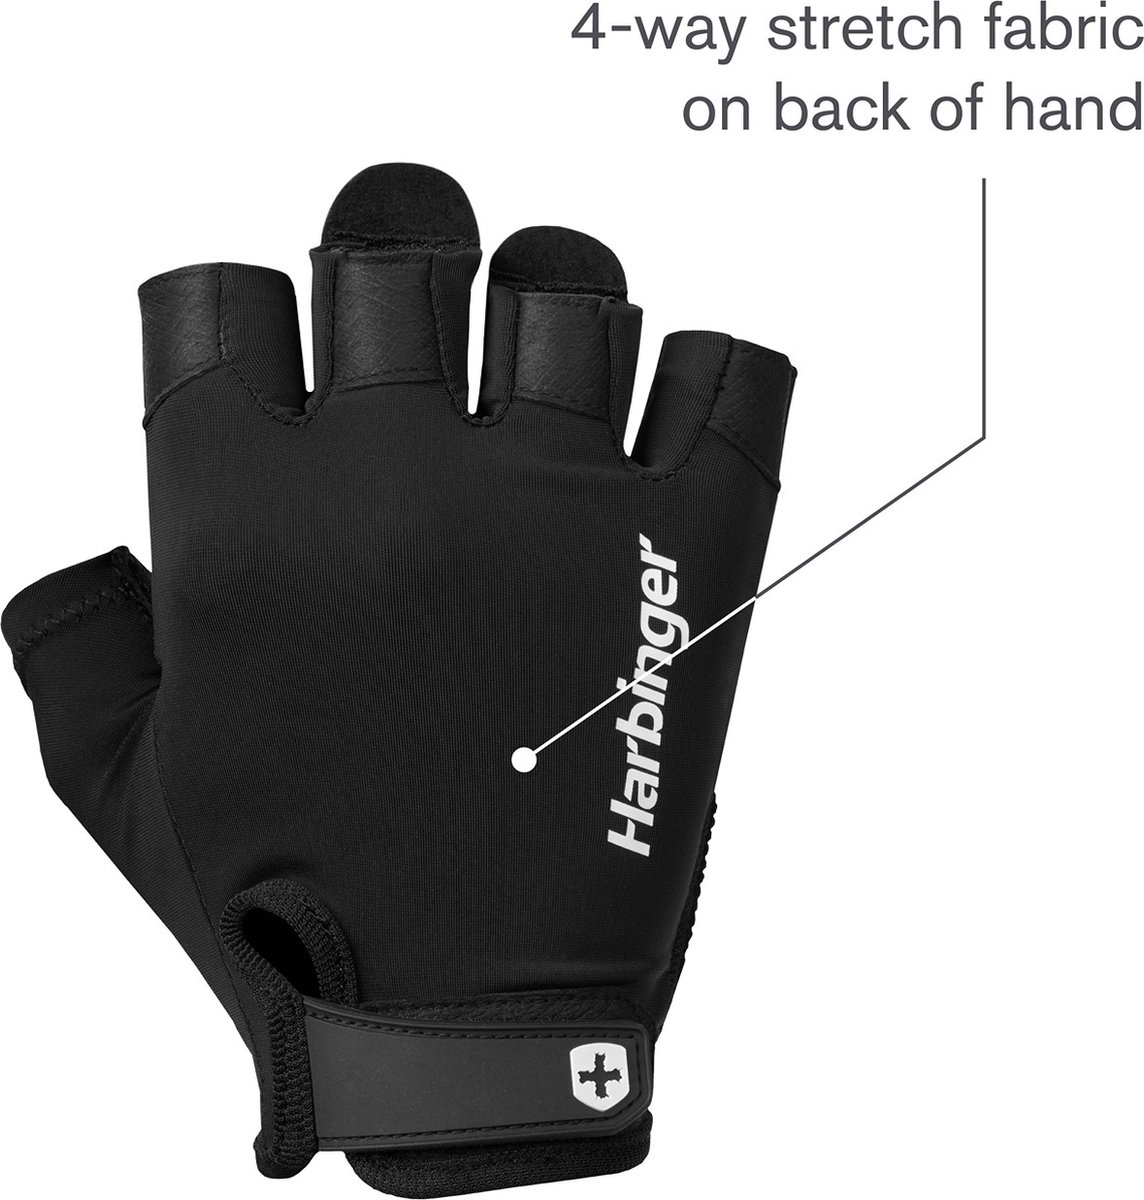 Harbinger Pro Gloves - Fitness Handschoenen Heren & Dames - Licht & Flexibel - M - Unisex - Zwart - Gym & Crossfit Training - Krachttraining